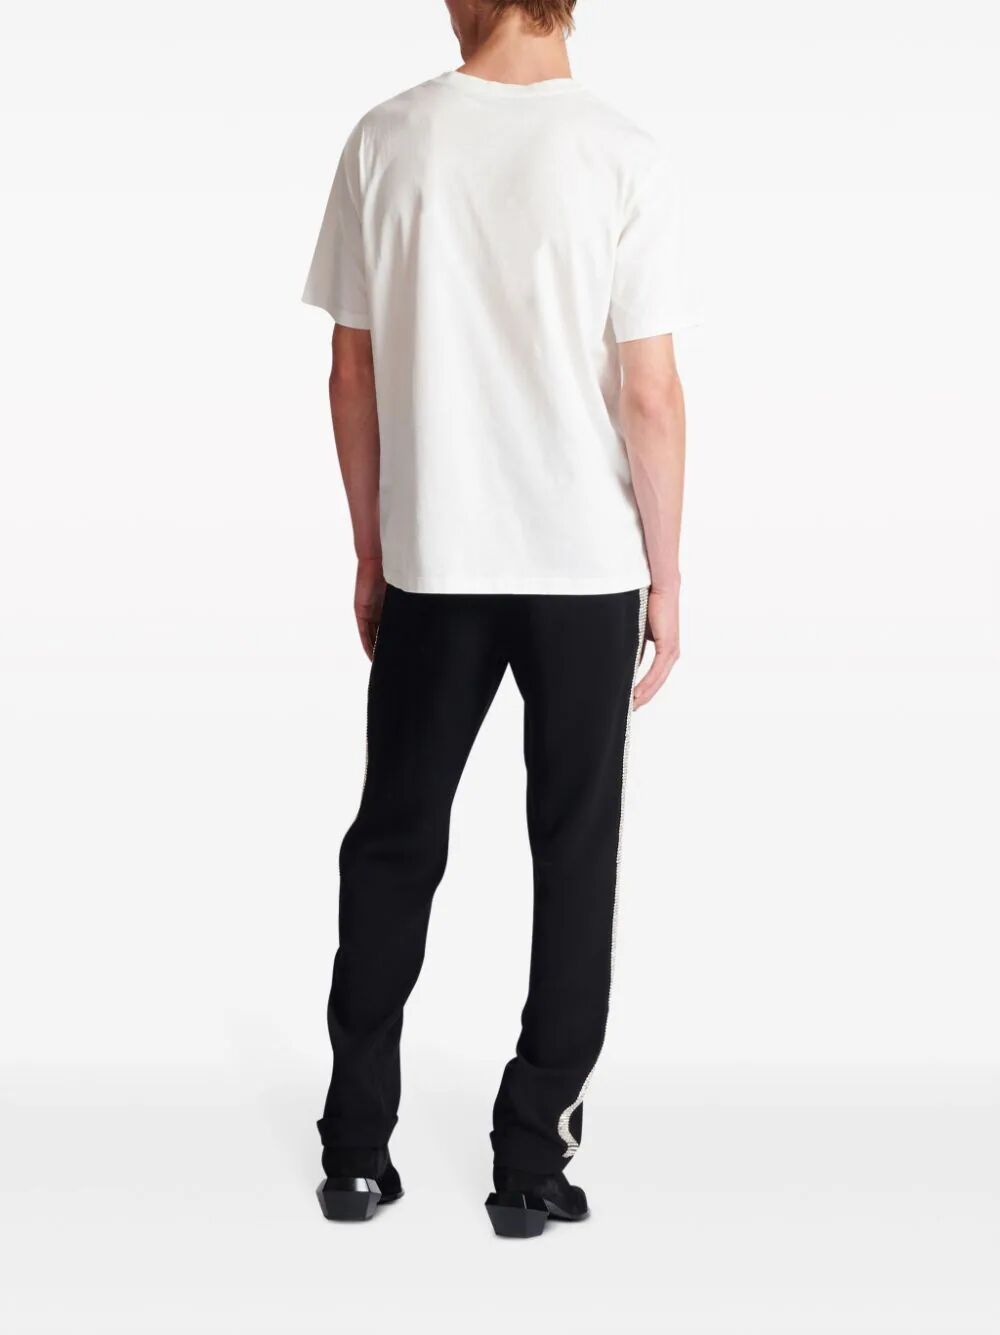 Balmain Star Print T-shirt Straight Fit